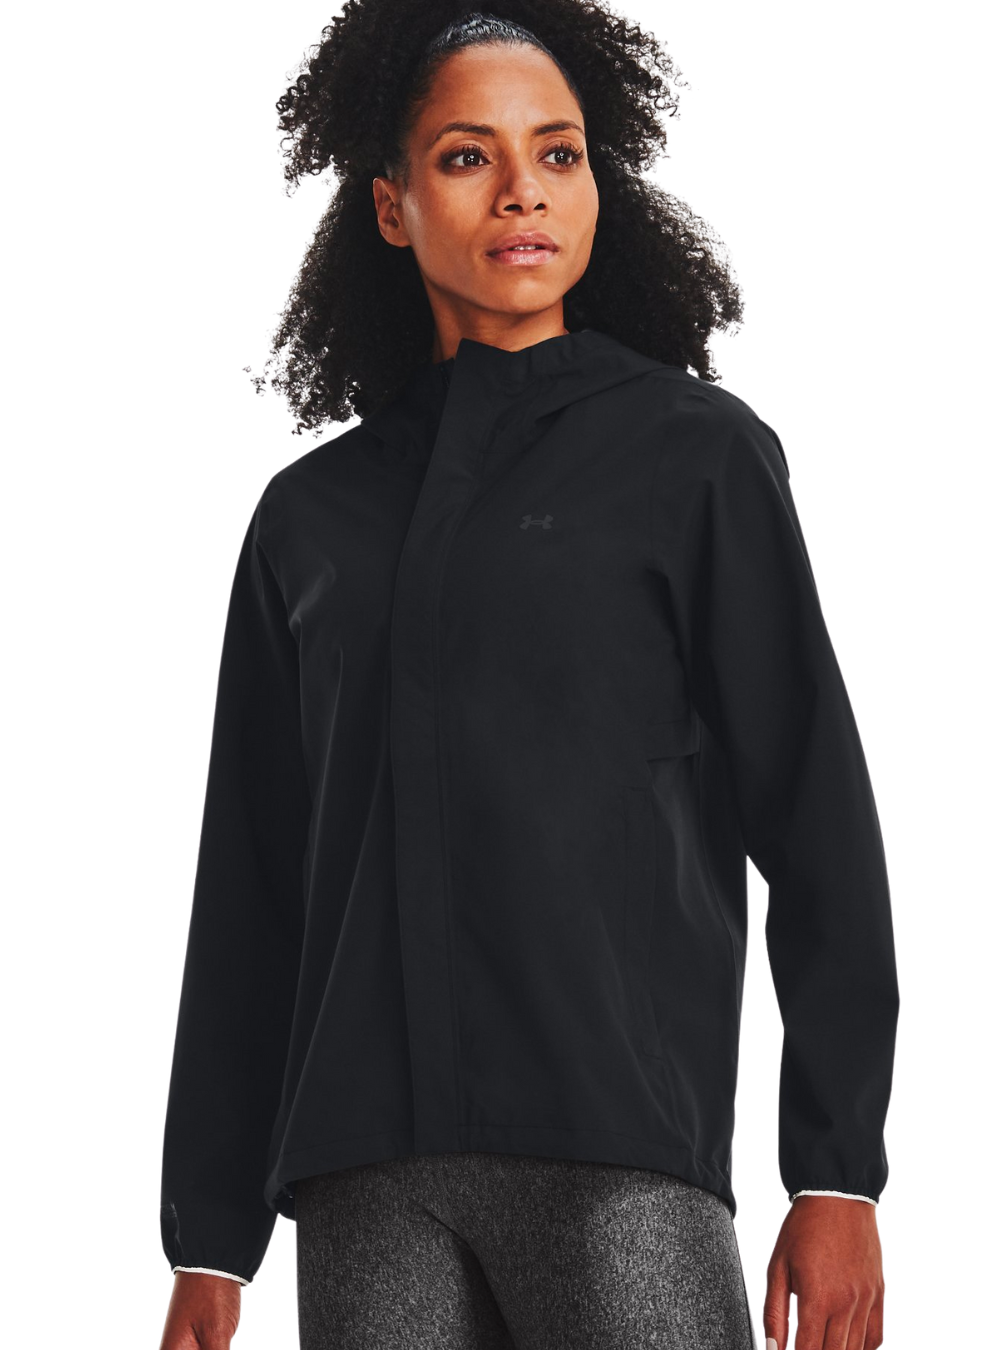 SALE - Under Armour Women's Cloudstrike Stretch 2.0 Jacket